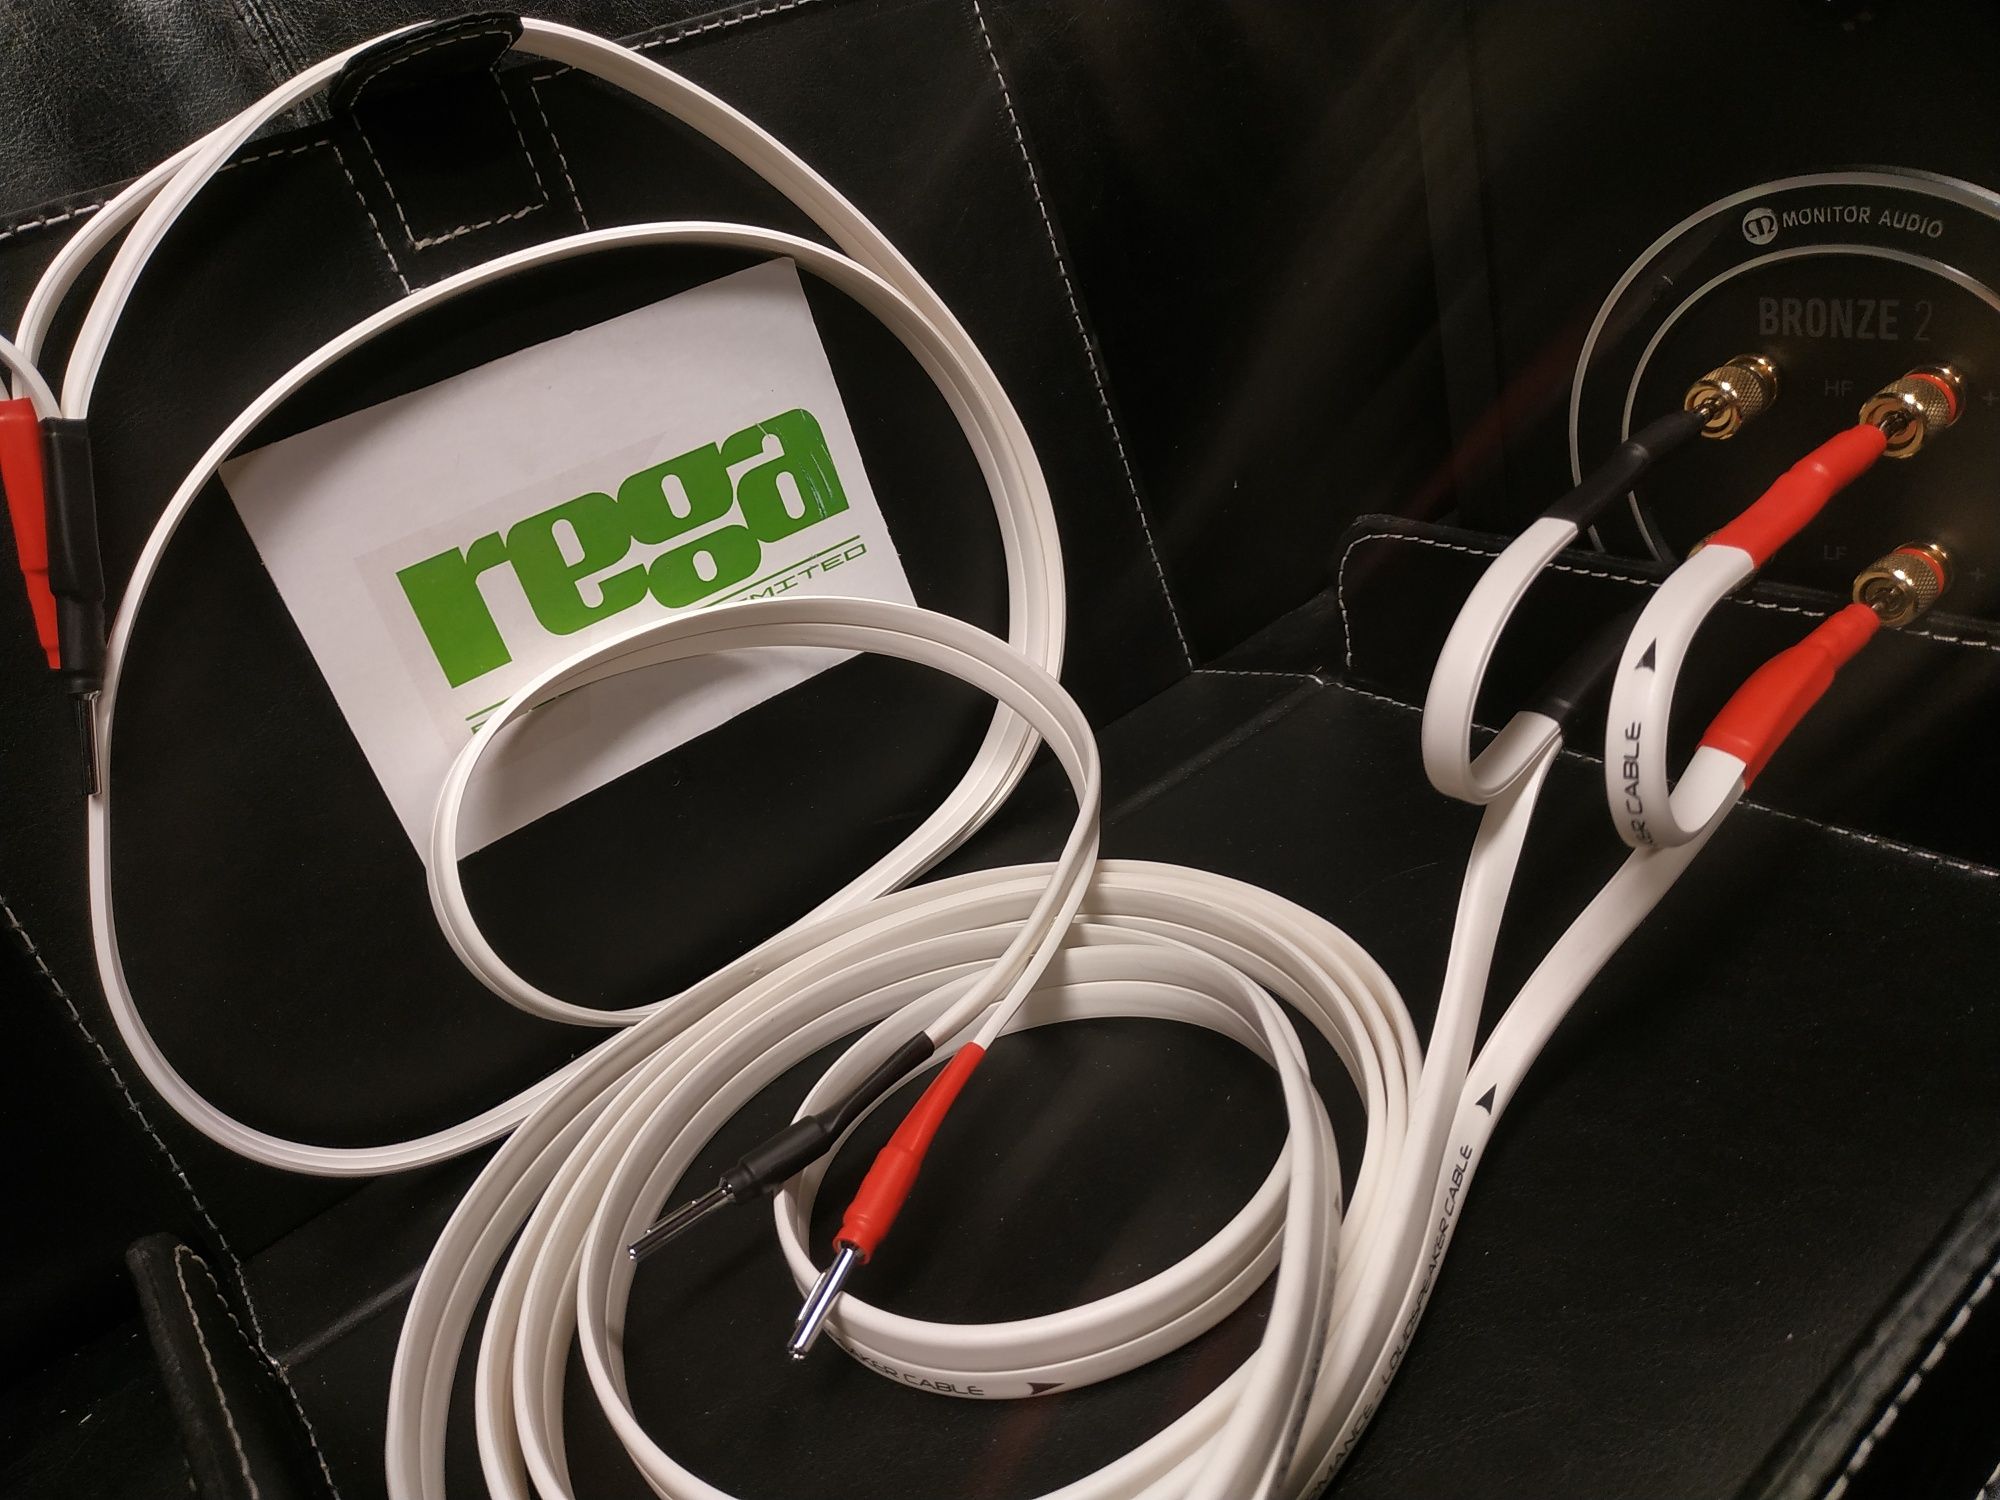 Rega Duet + zworki kable głośnikowe 4mm2 konfekcja Trans Audio Hi-Fi